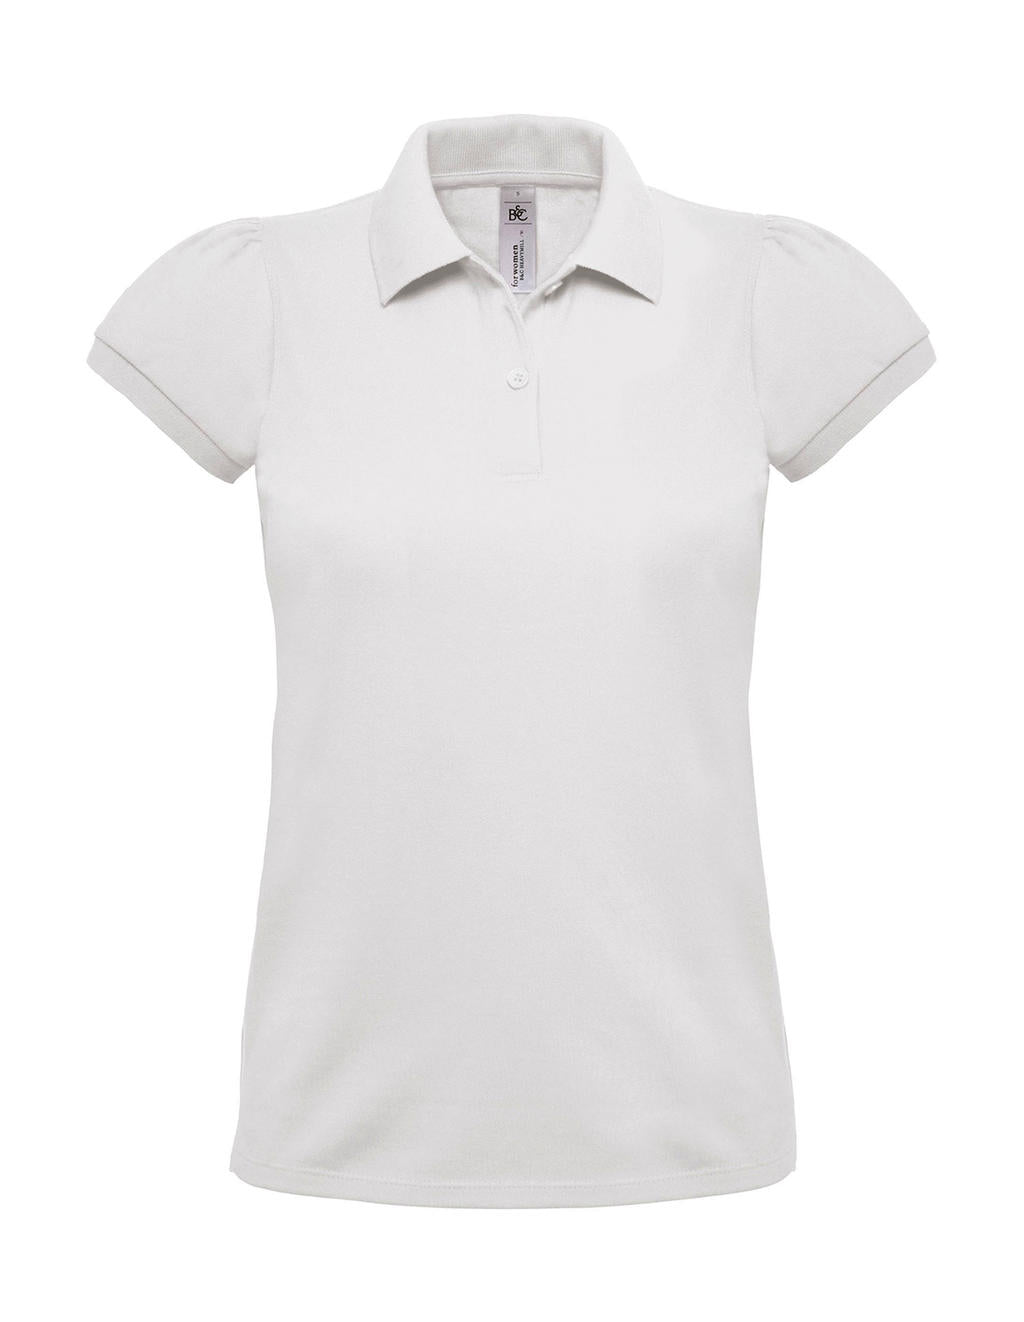 B&C Damen Polo Shirt Kragen Basic T-Shirt T Shirt Poloshirt kurzarm